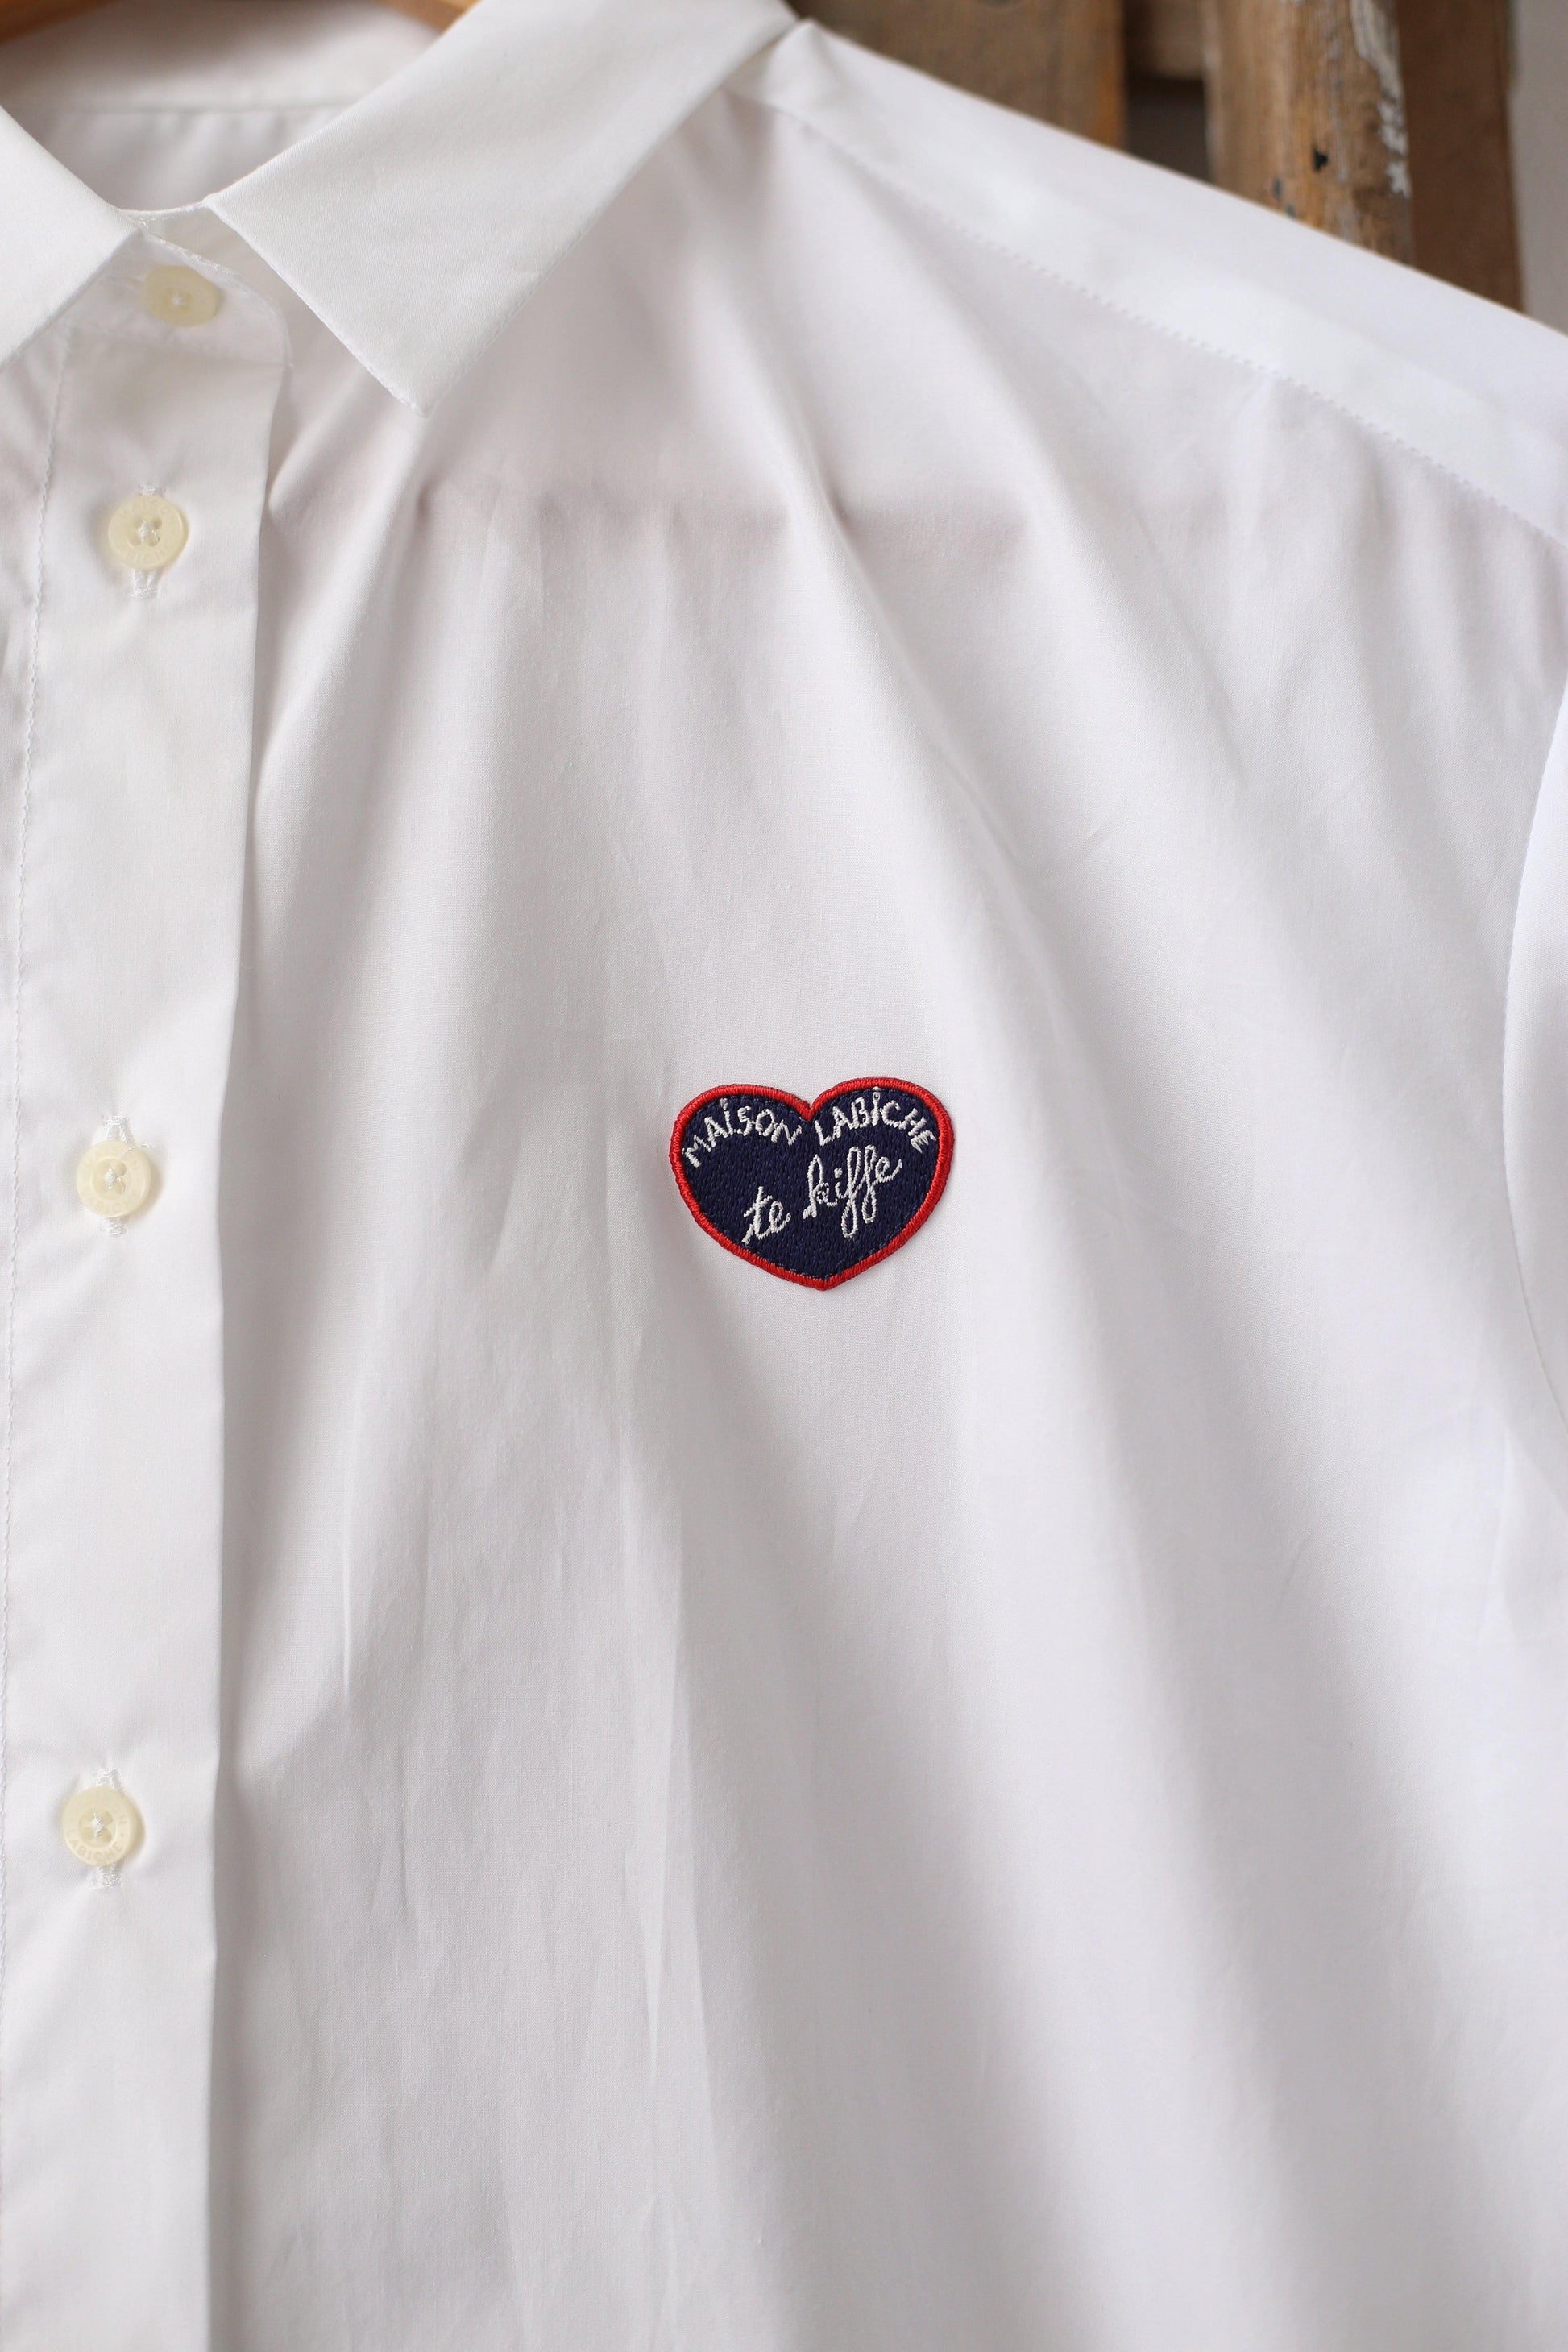 Maison La Biche - Heart Patch White Boyfriend Shirt - 32 The Guild 